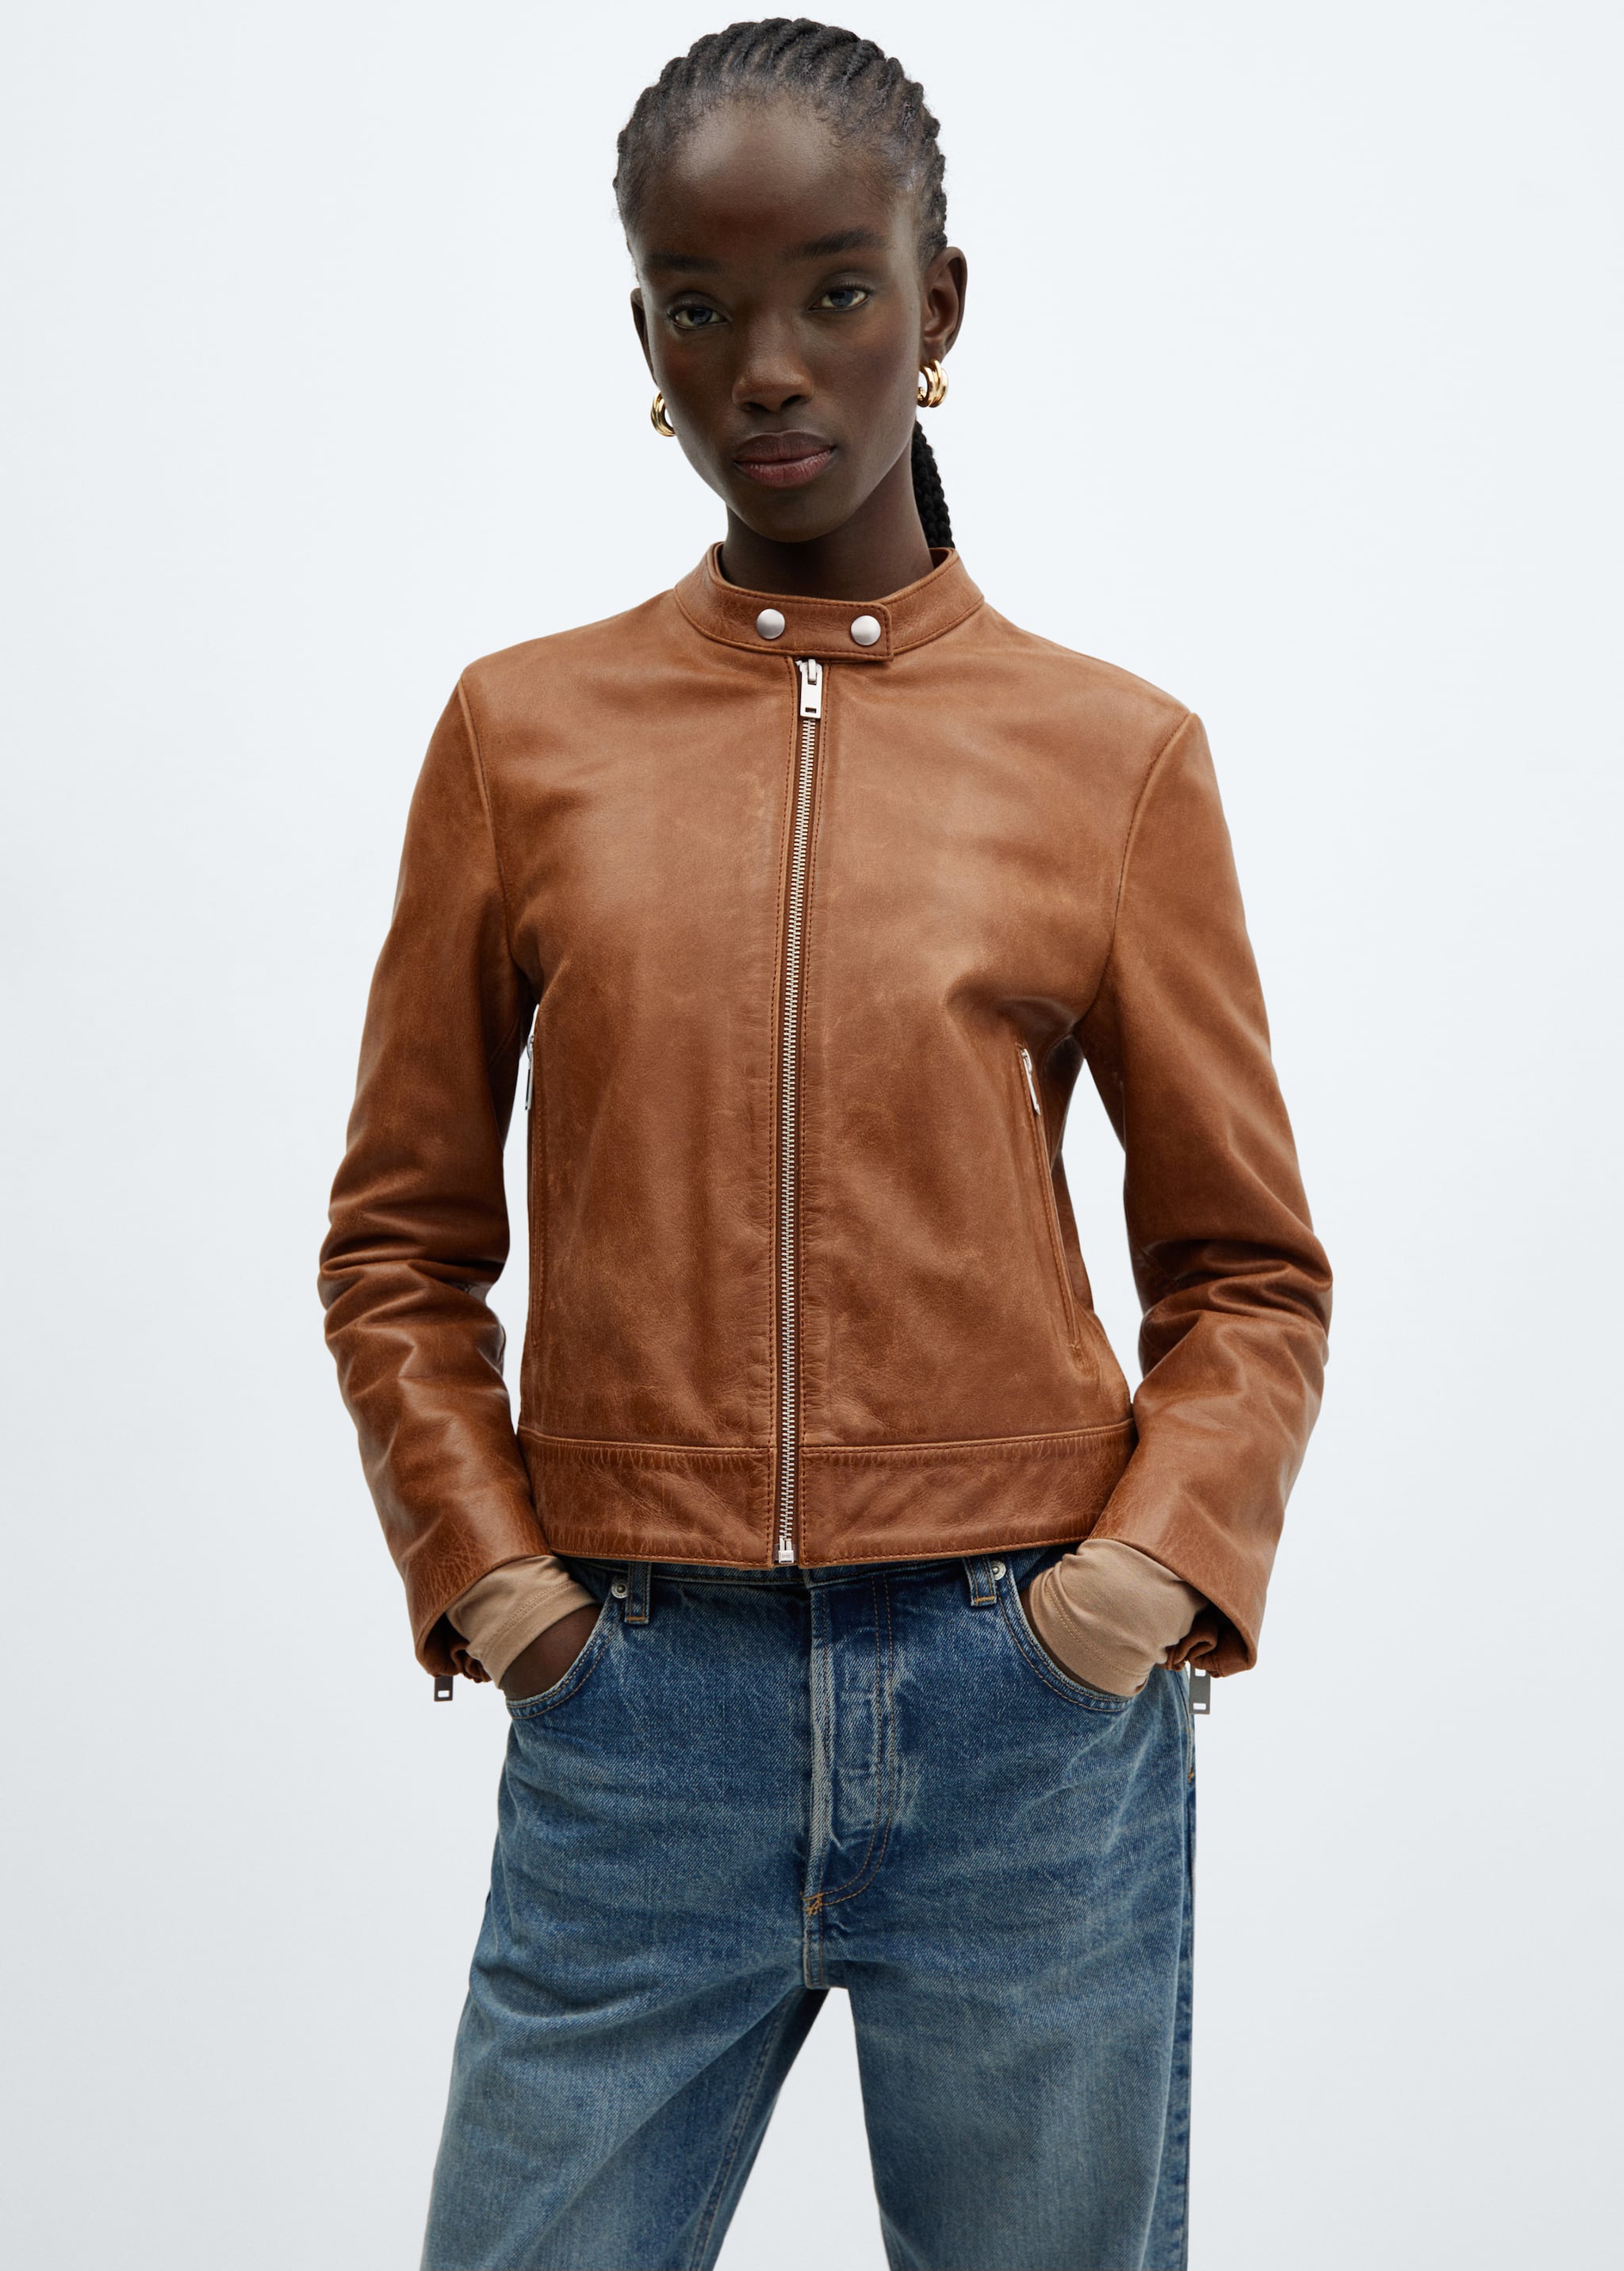 100% leather jacket - Medium plane